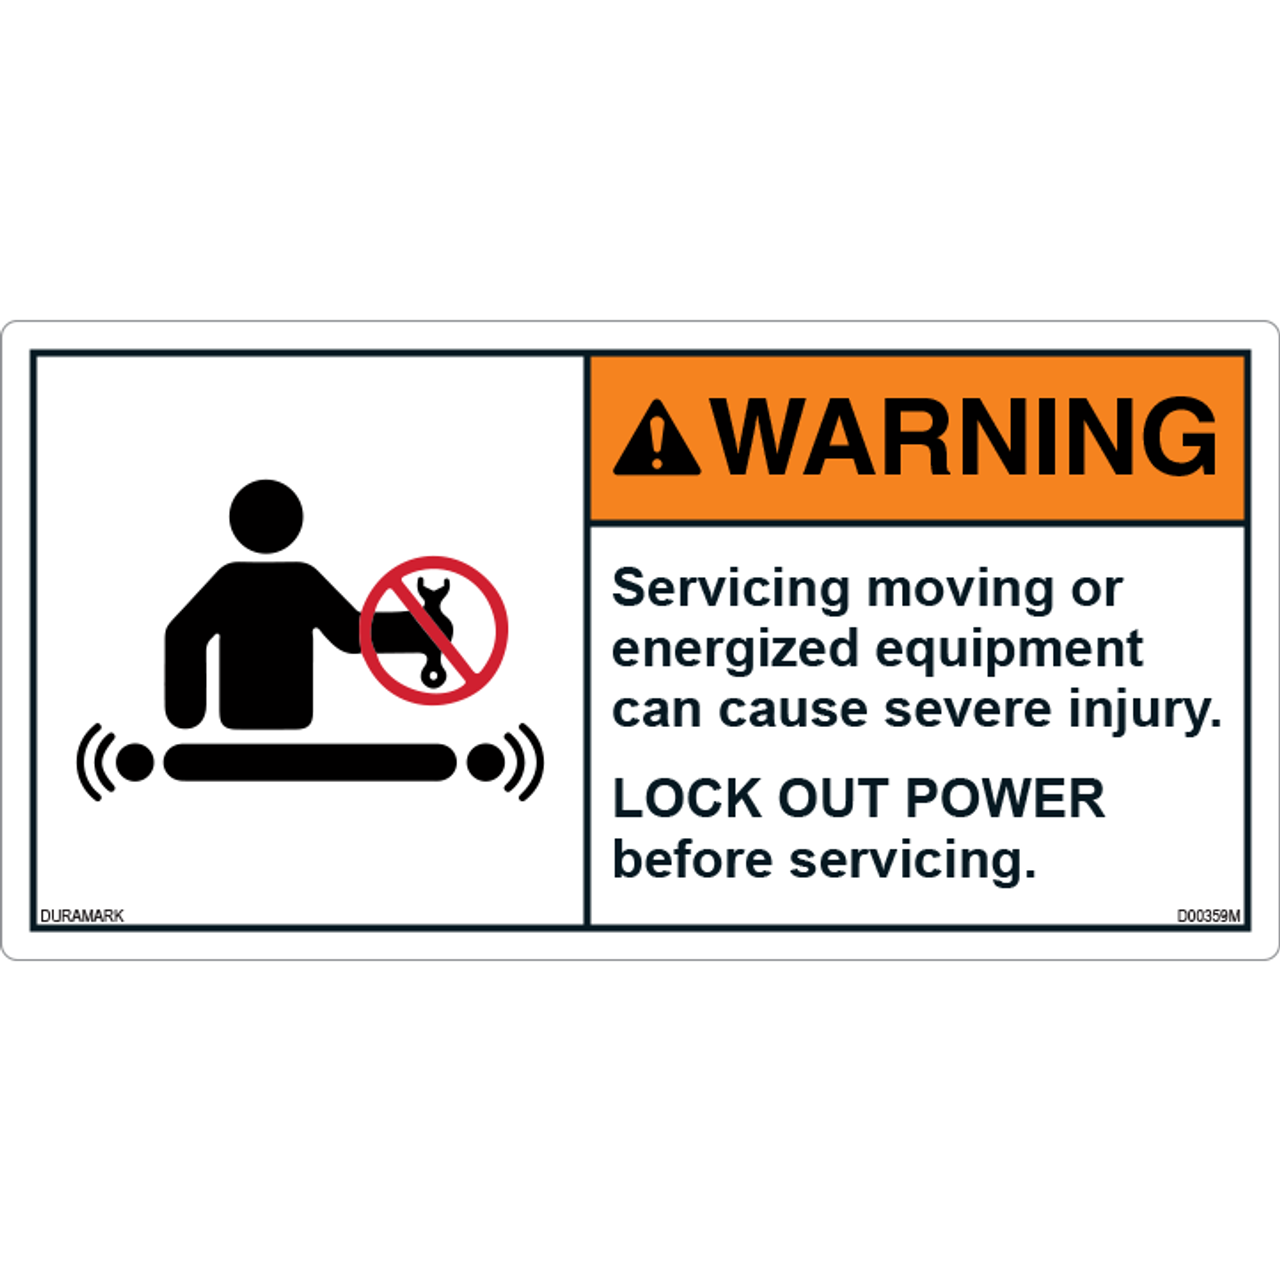 ANSI Safety Label - Warning - Servicing - Lockout Power